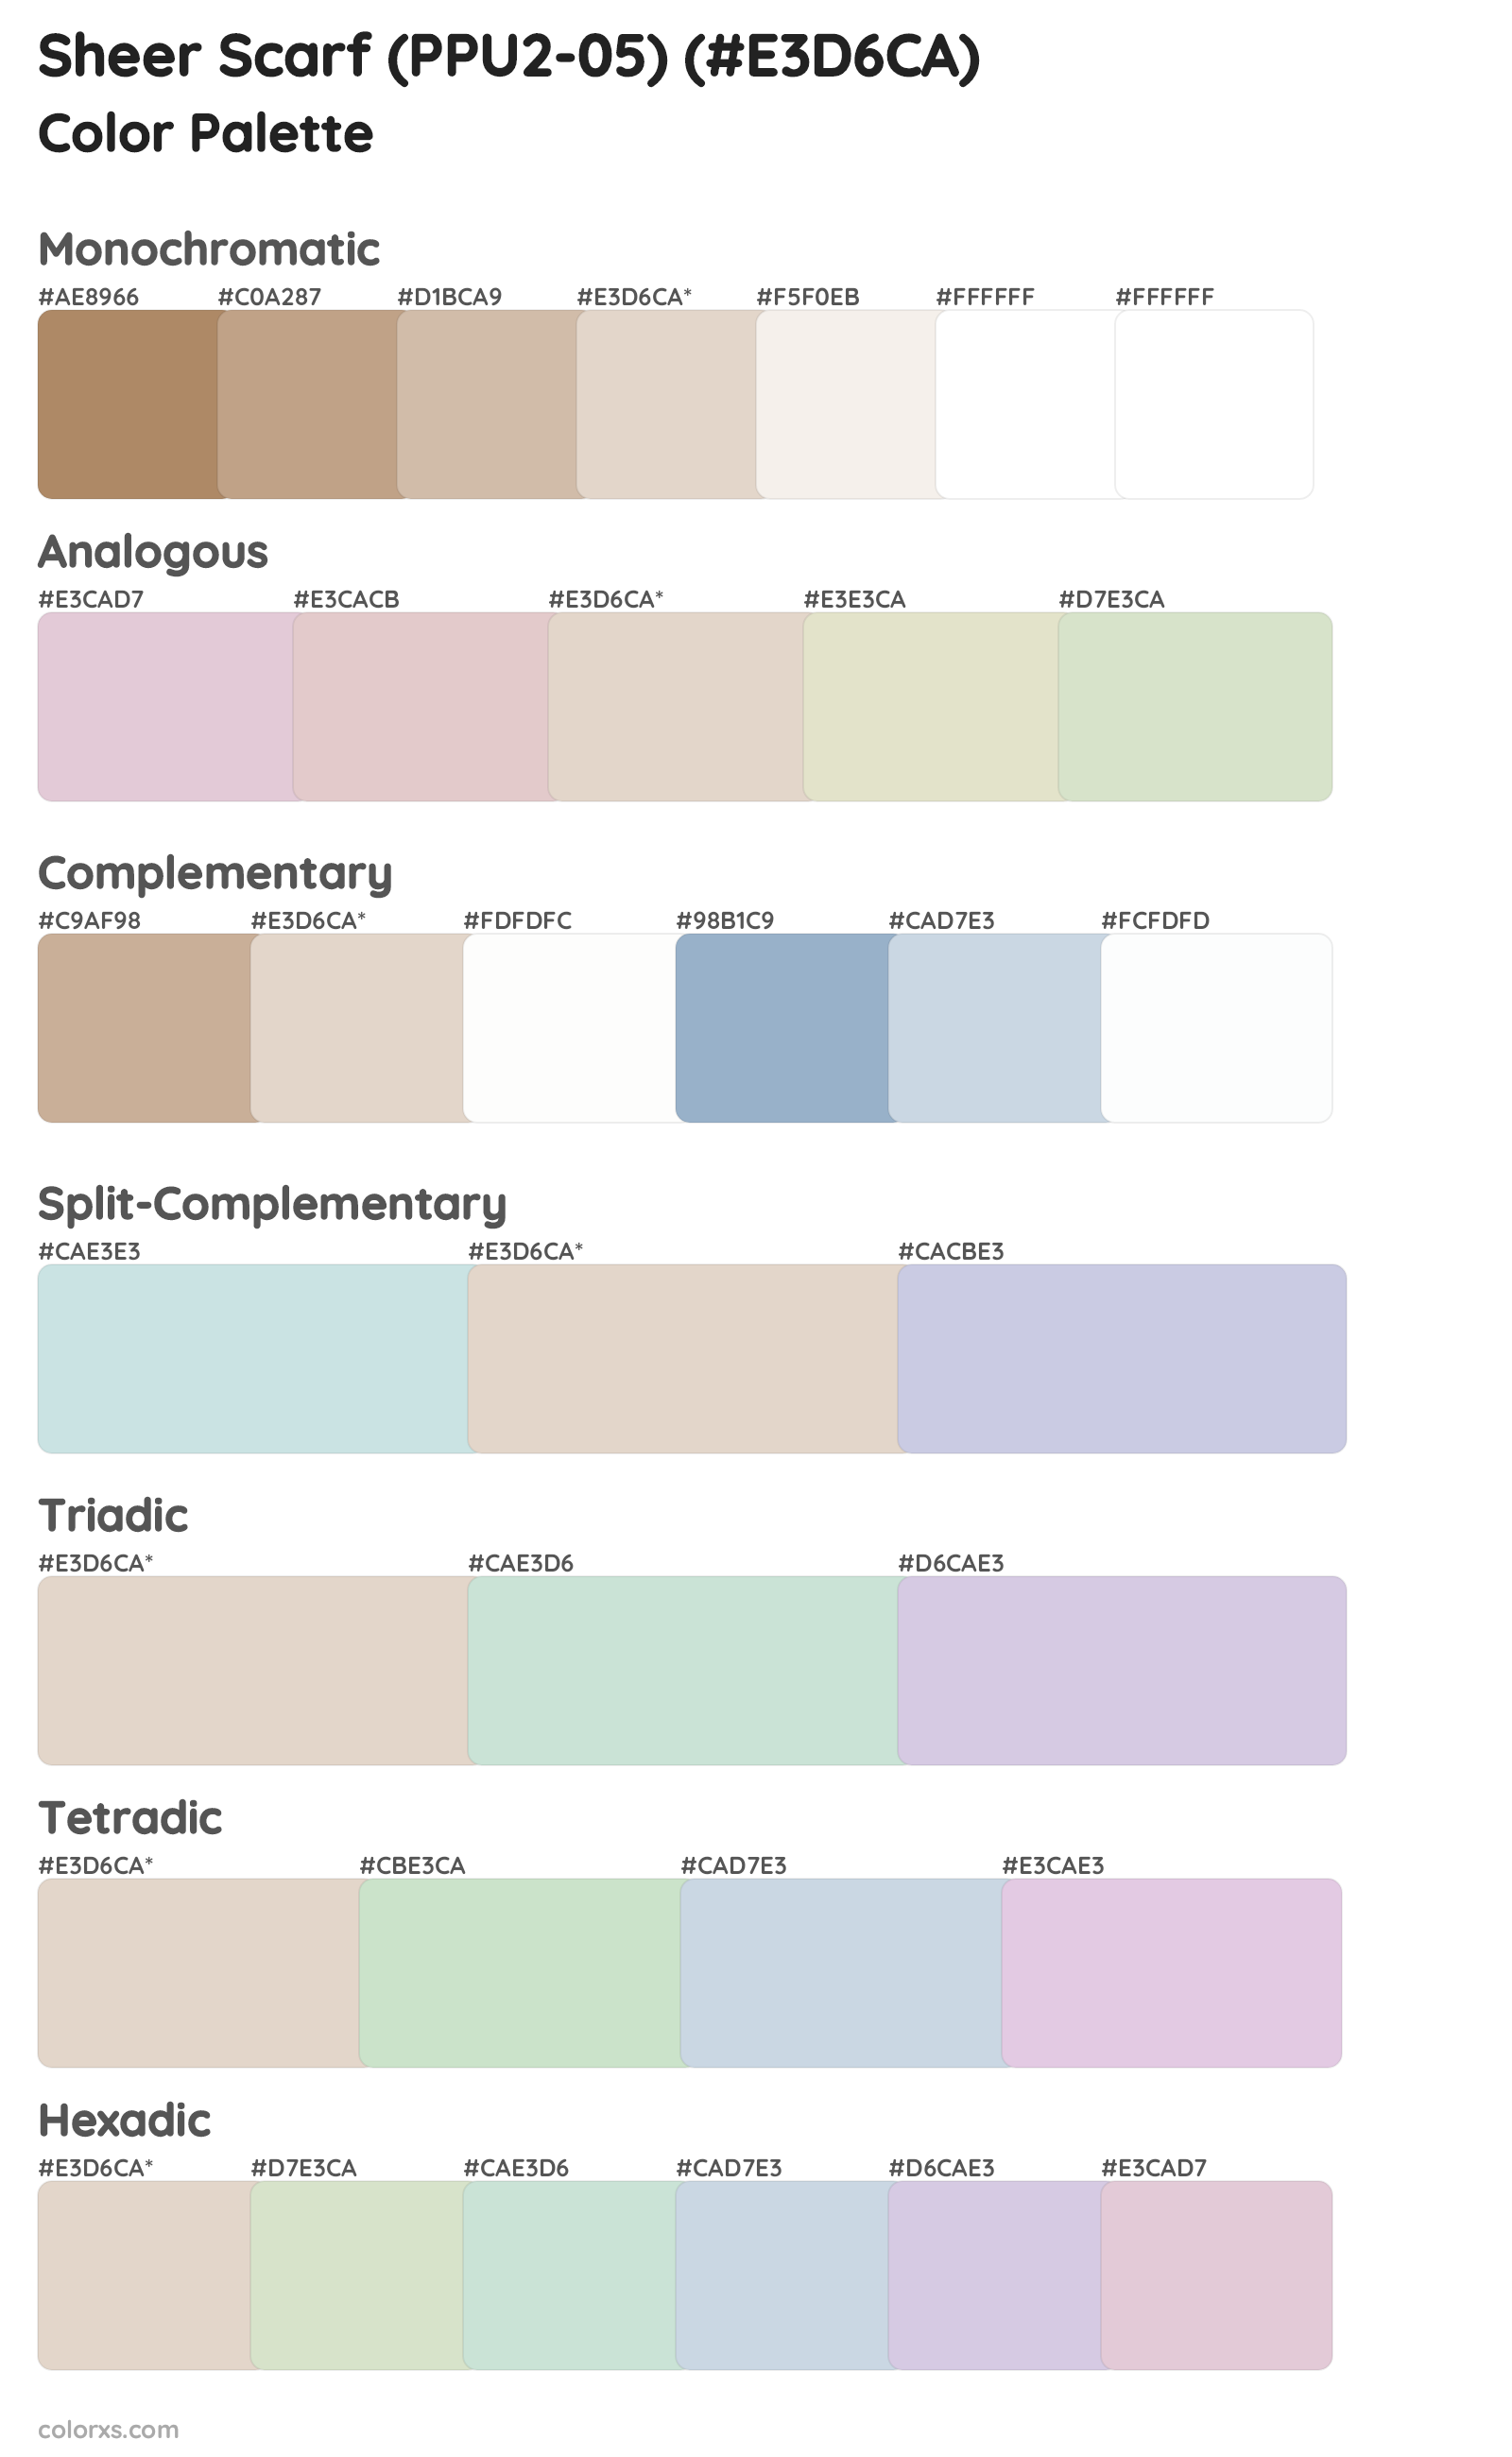 Sheer Scarf (PPU2-05) Color Scheme Palettes